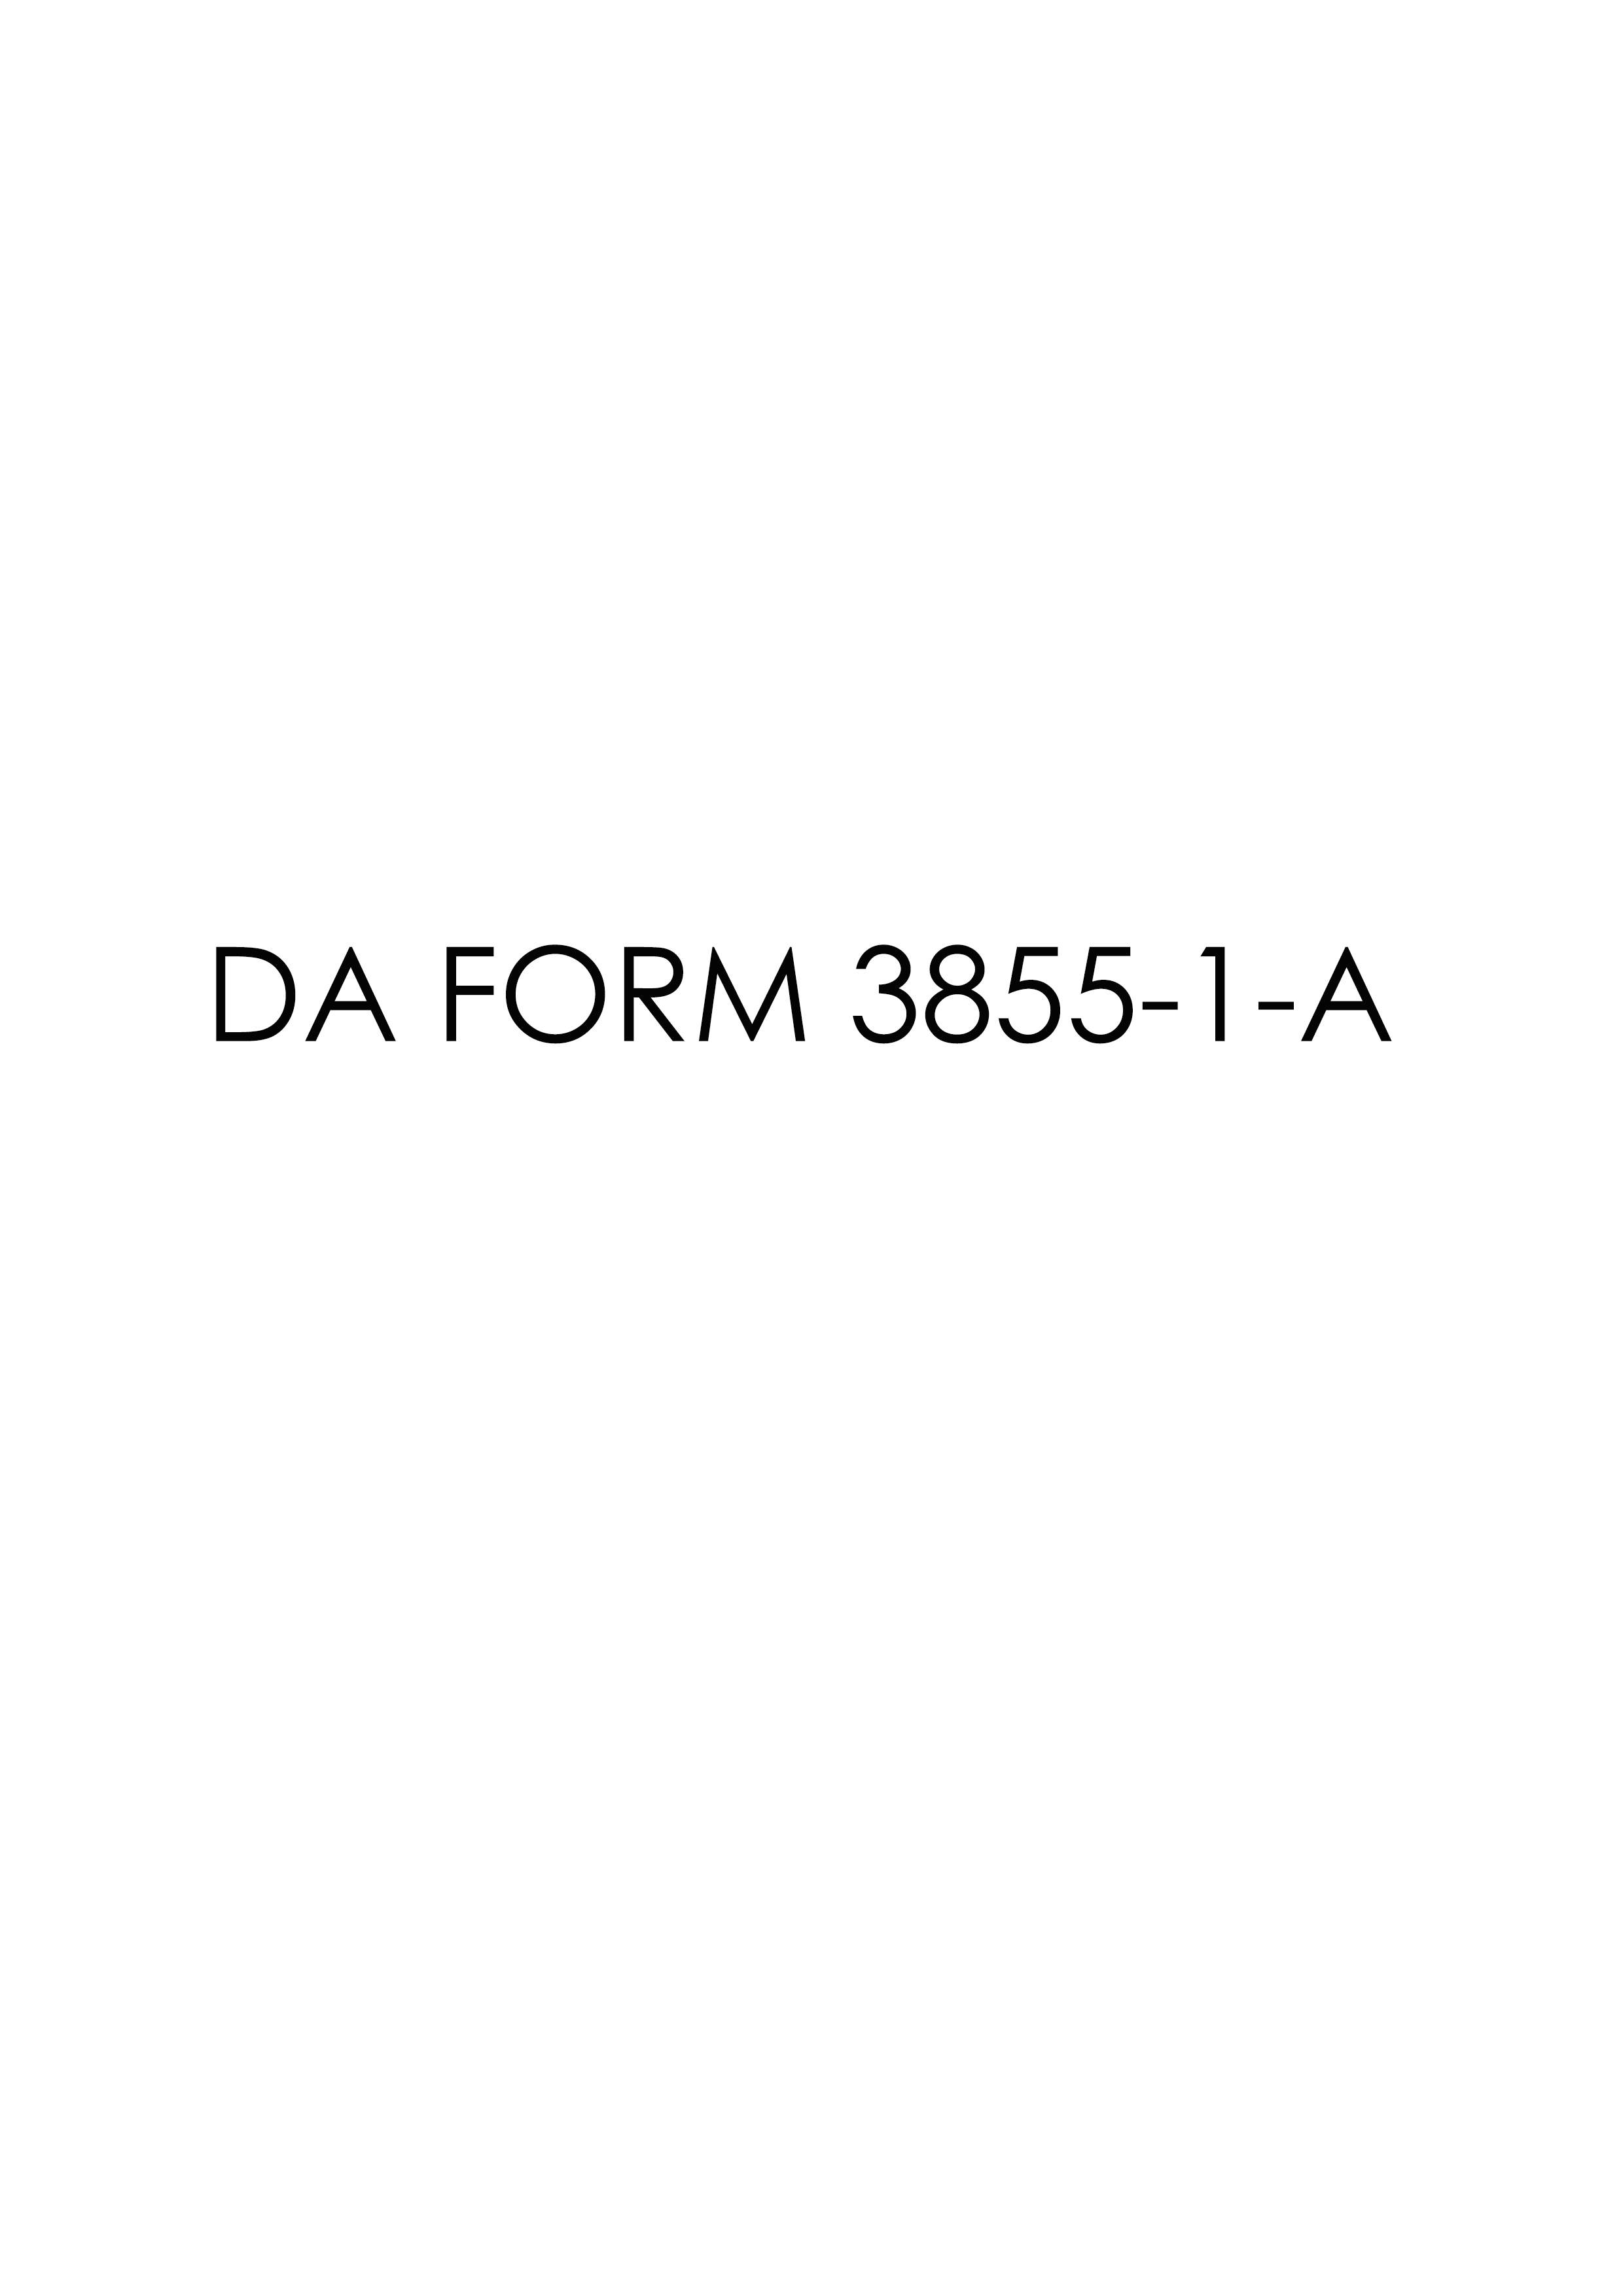 da Form 3855-1-A fillable